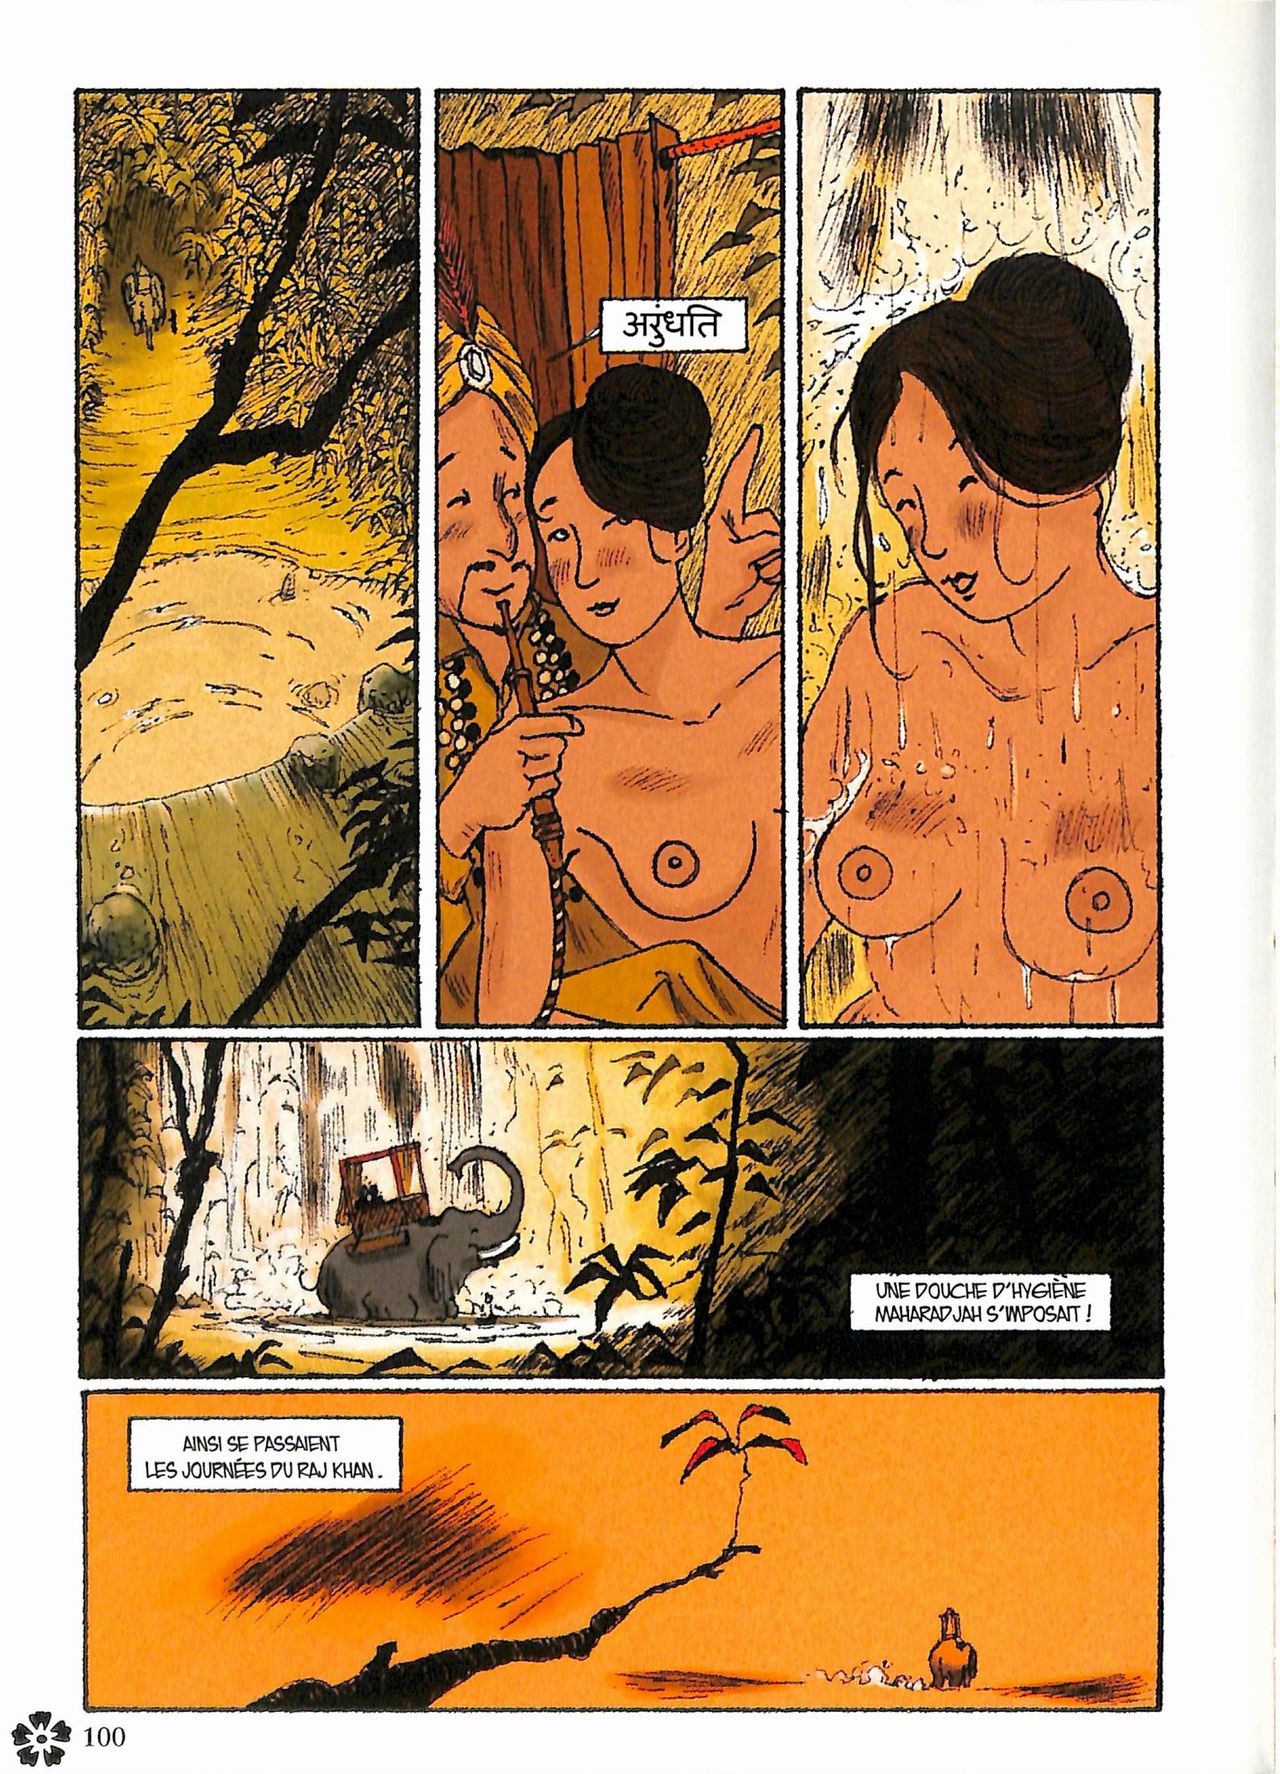 Kama Sutra en bandes dessinées - Kama Sutra with Comics numero d'image 101